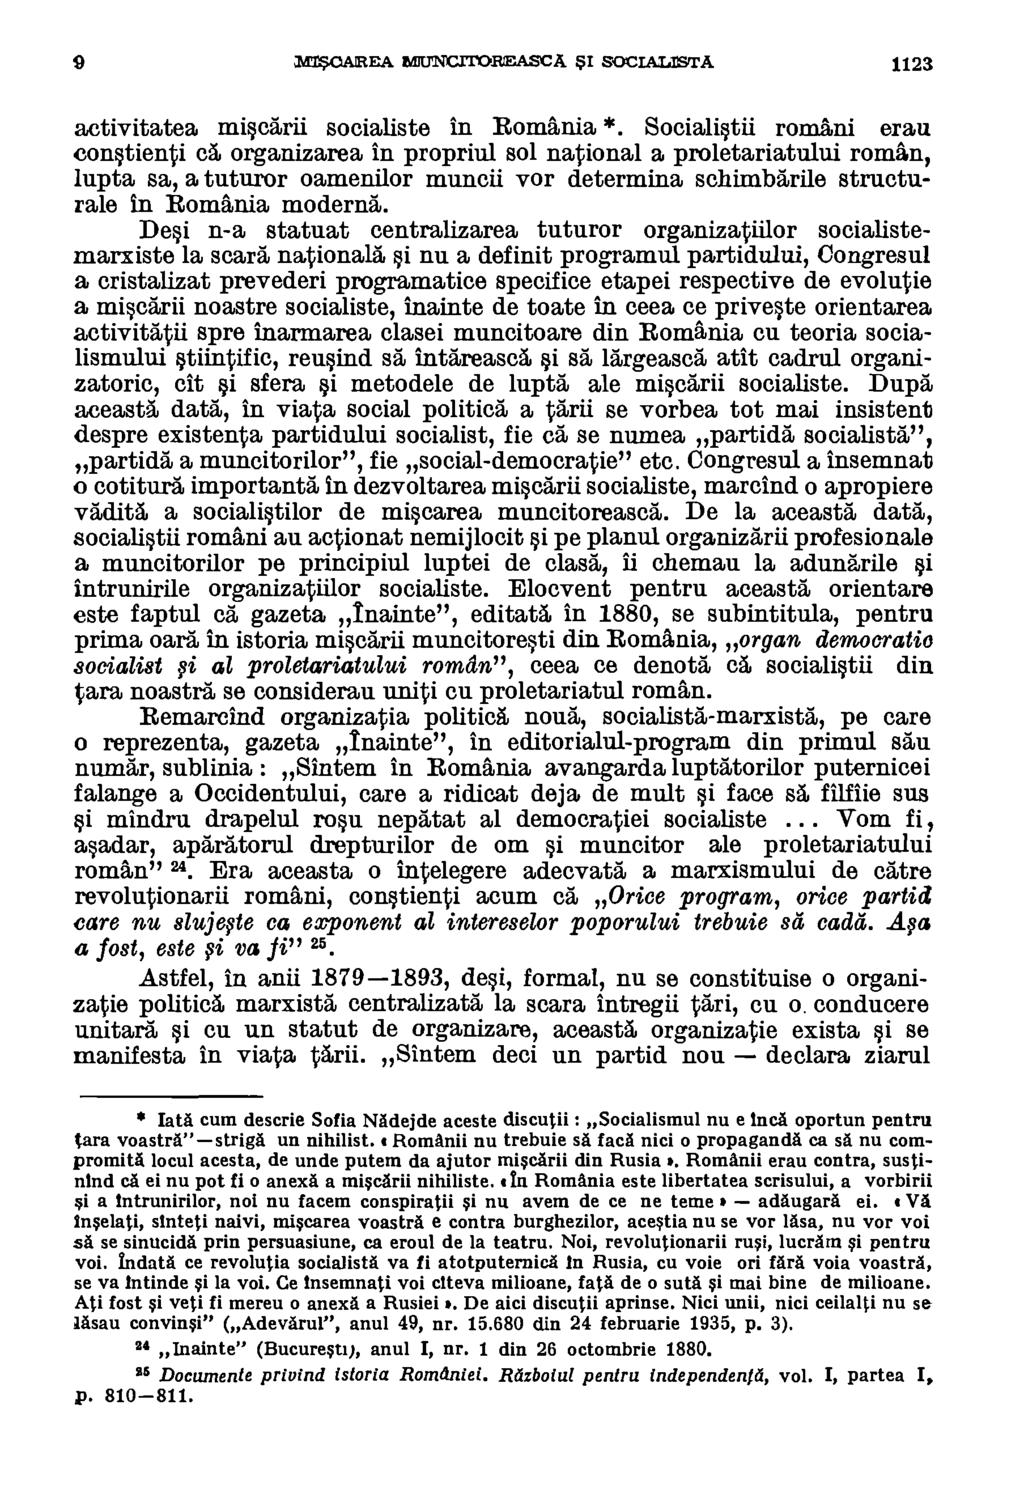 9 Wrg.CAIREA INIRYNCrl'OREASICA I SOCIALISTA 1123 activitatea mi carii socialiste in Romania *.